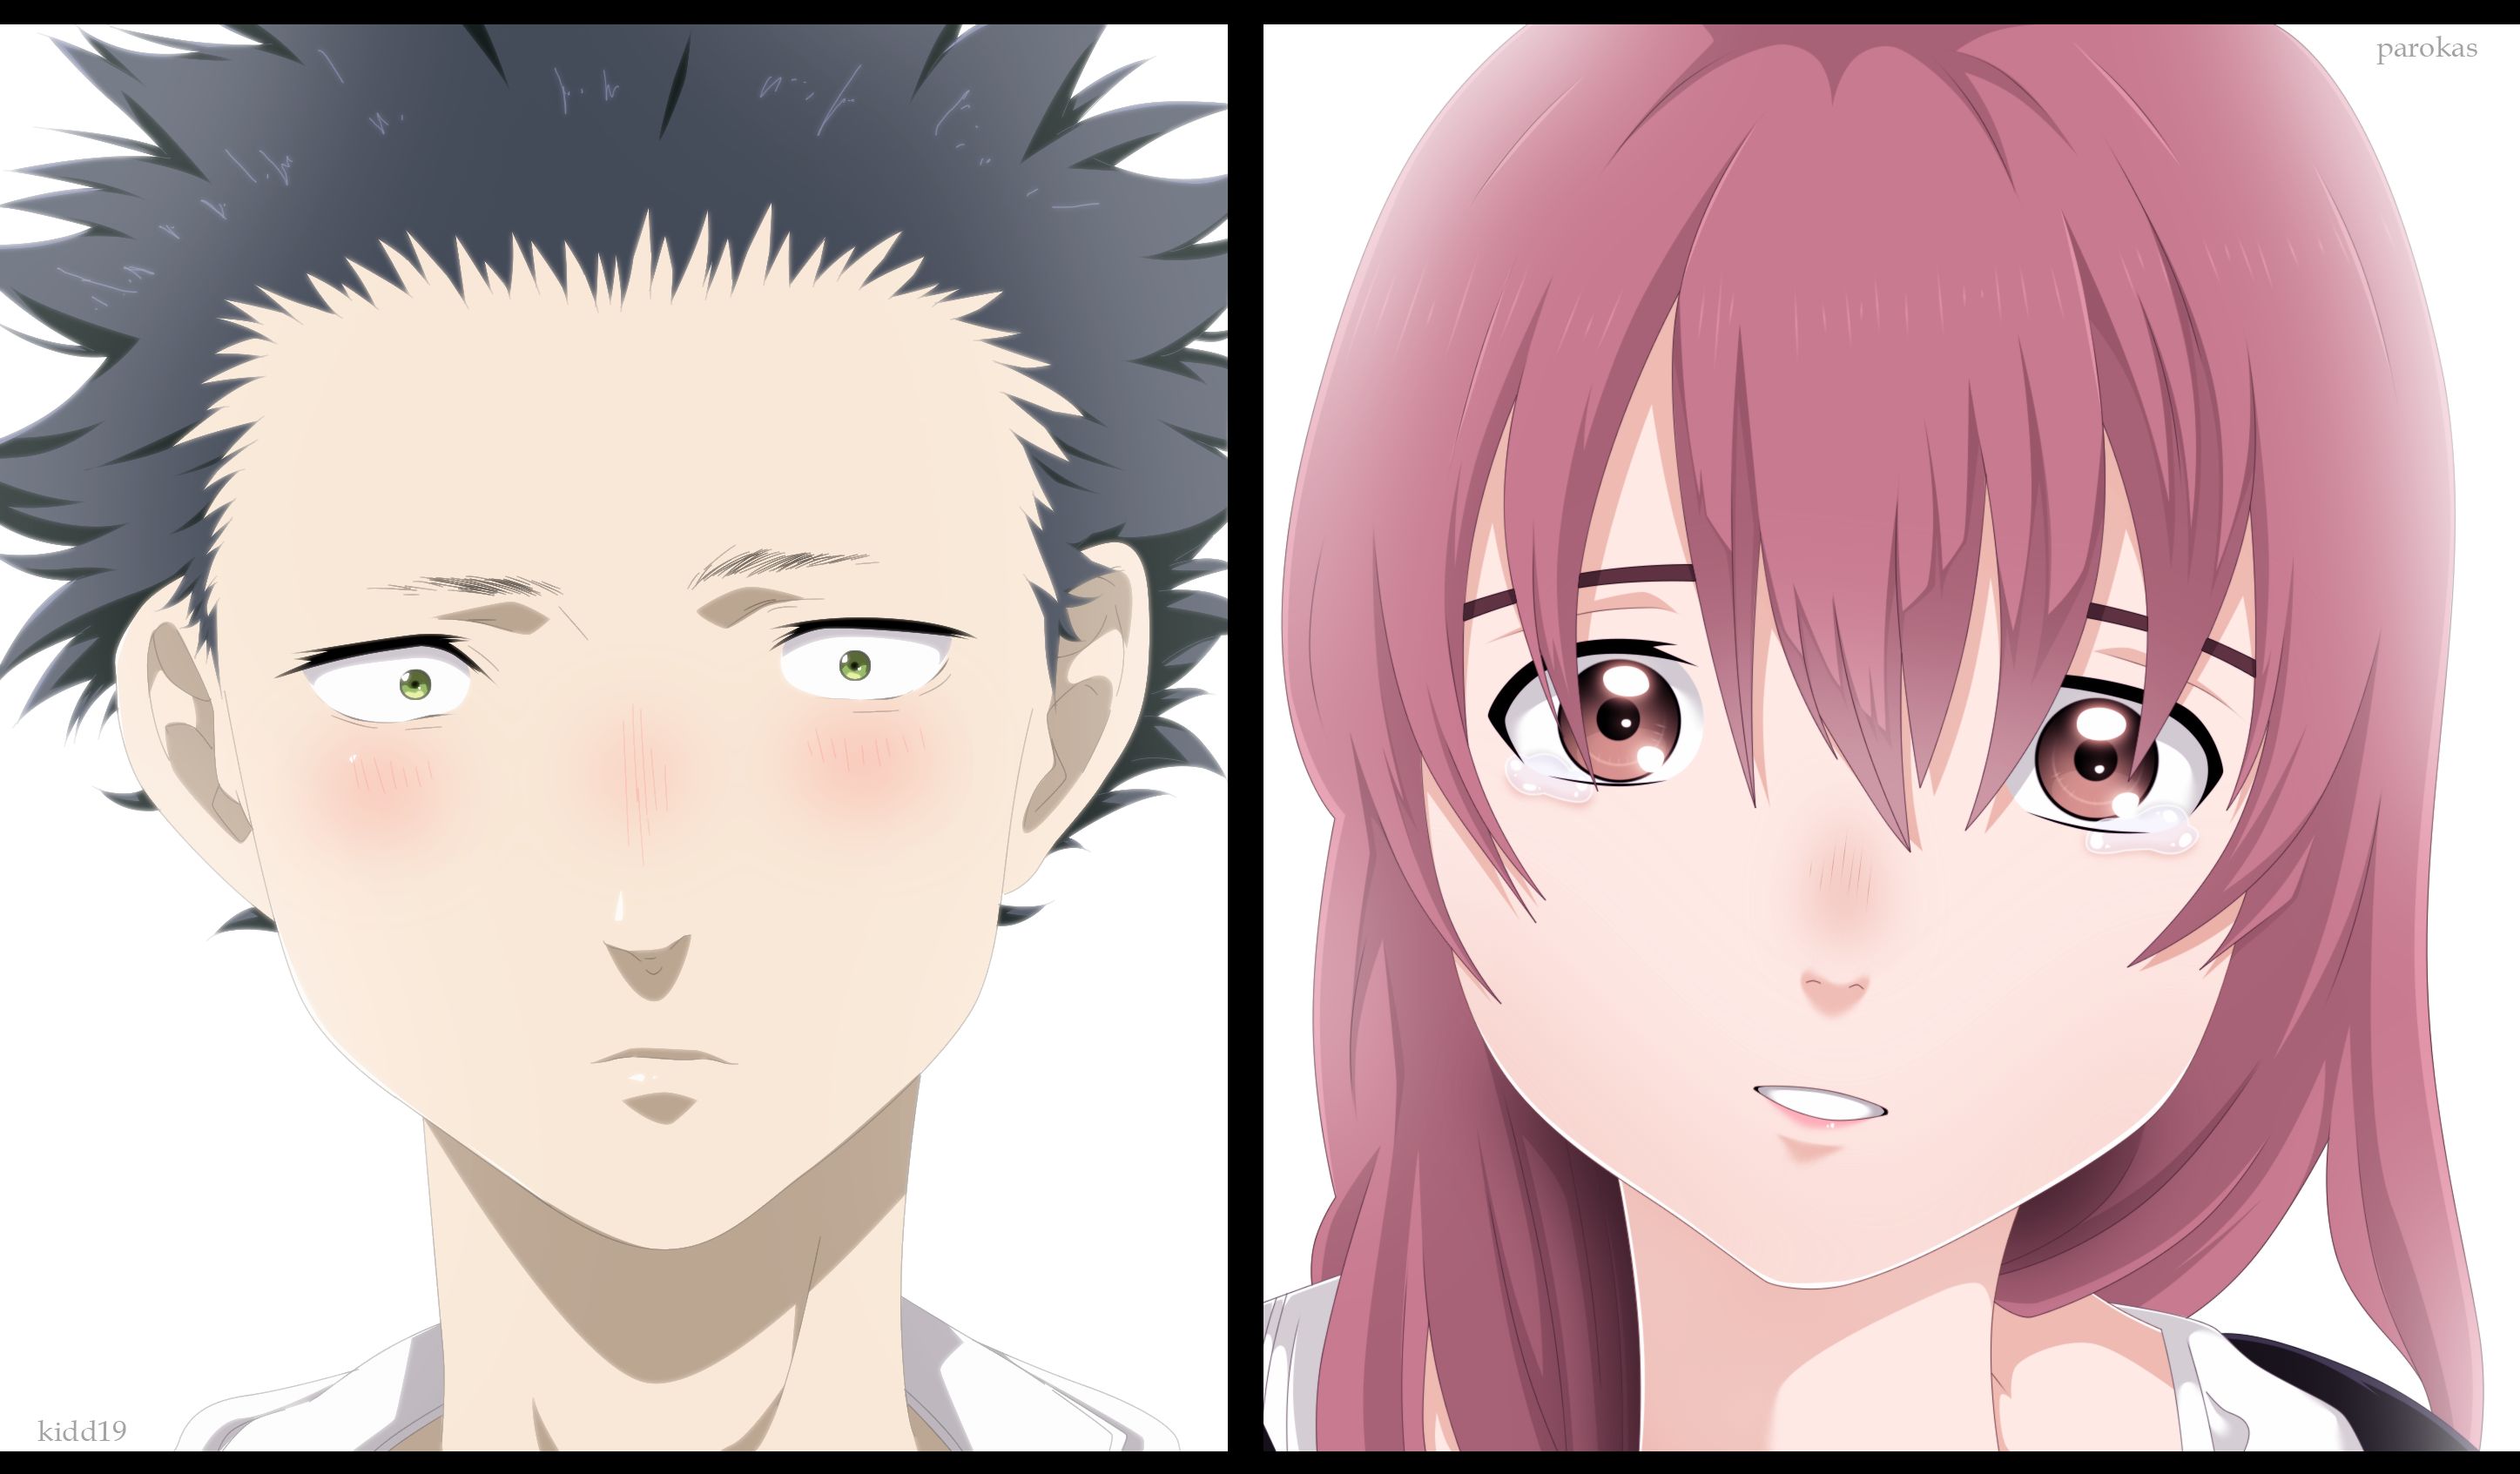 Baixe gratuitamente a imagem Anime, Shouko Nishimiya, Shouya Ishida, Koe No Katachi na área de trabalho do seu PC